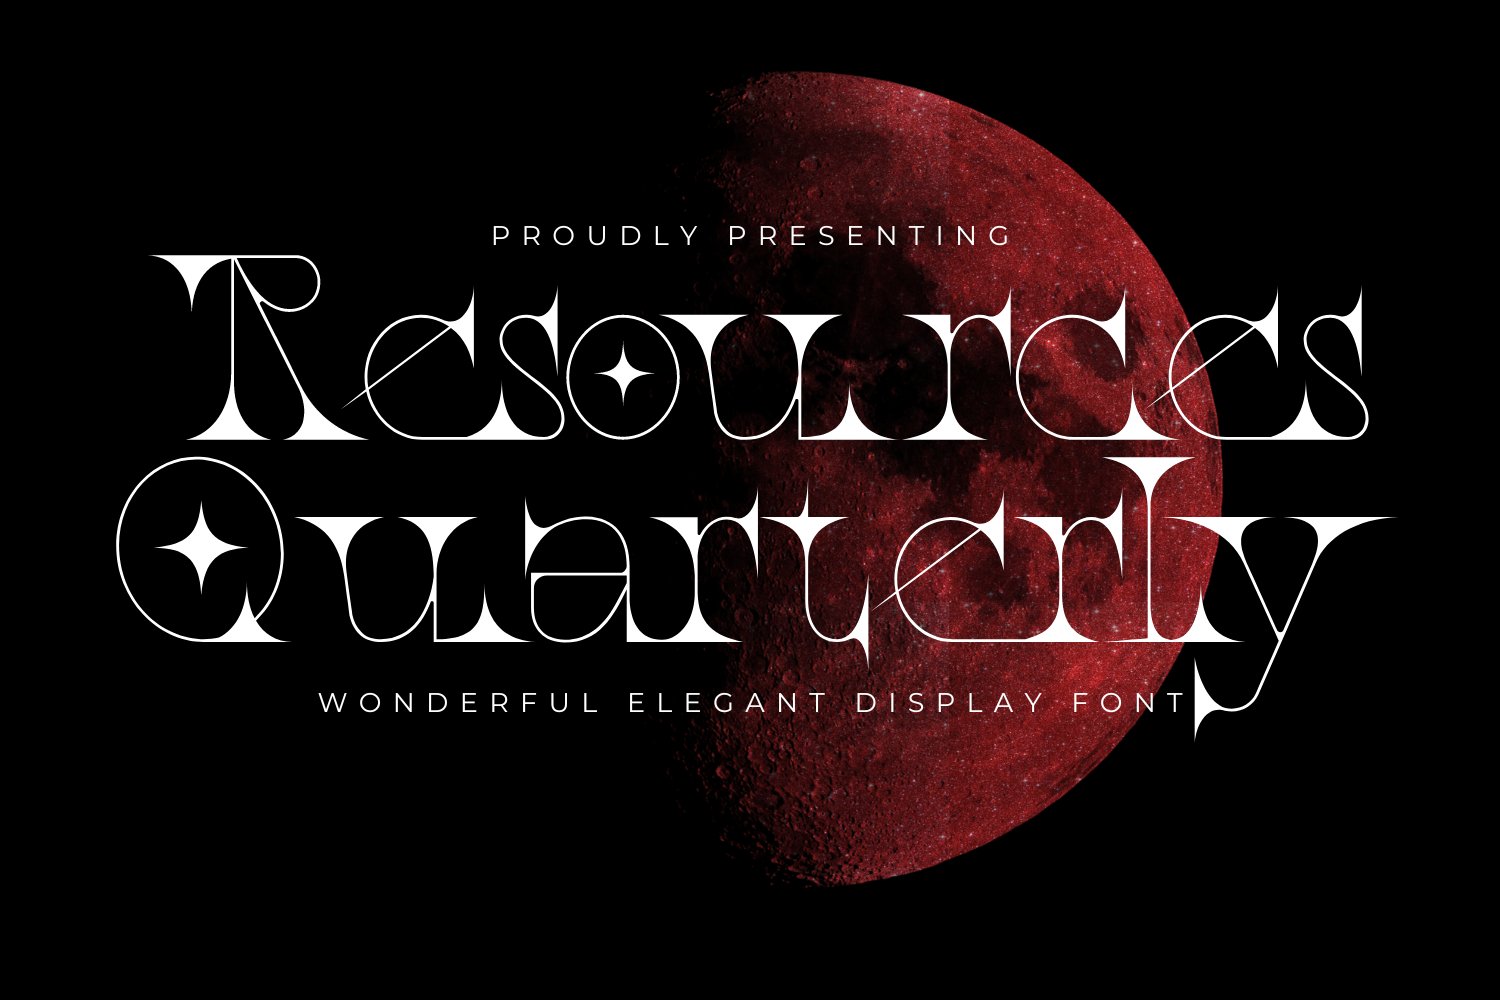 Resources Quarterly - Elegant Font cover image.